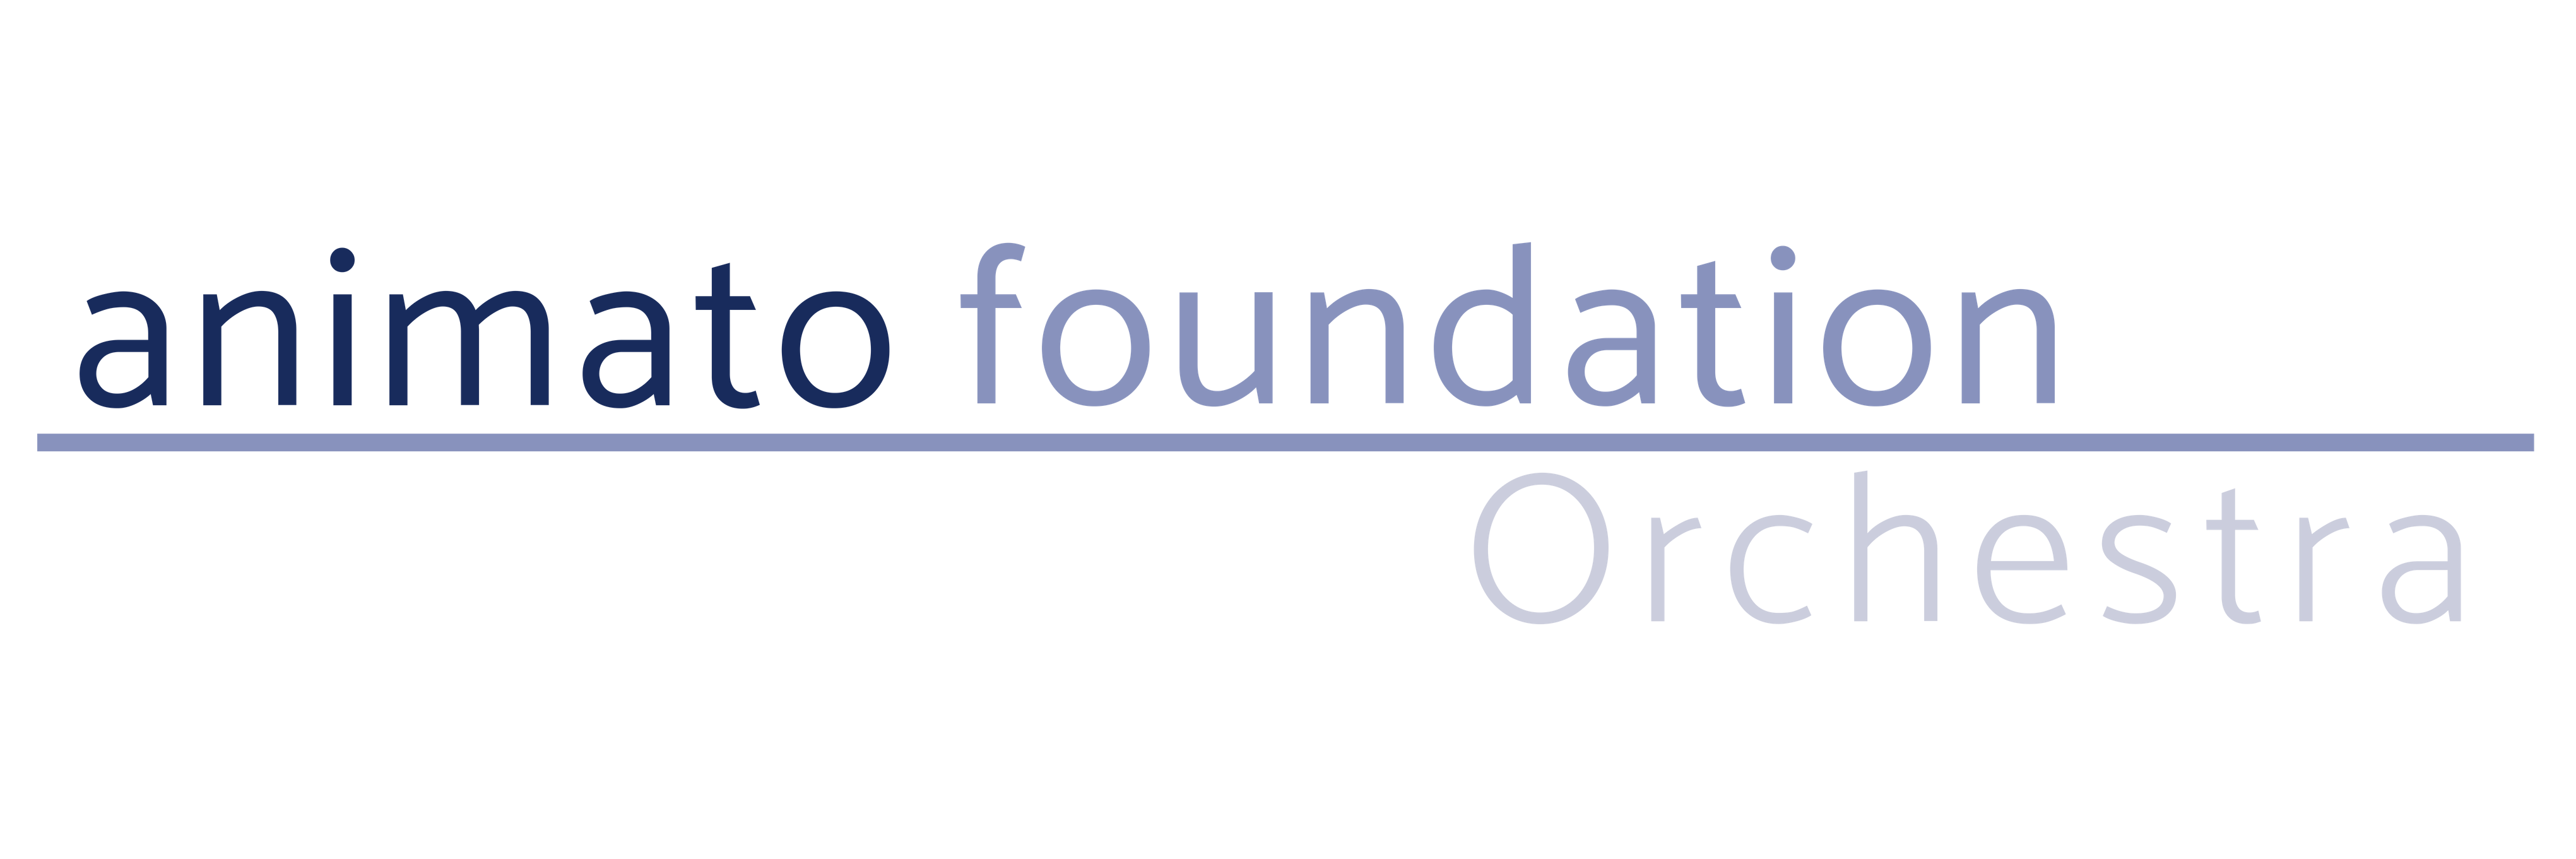 animato foundation